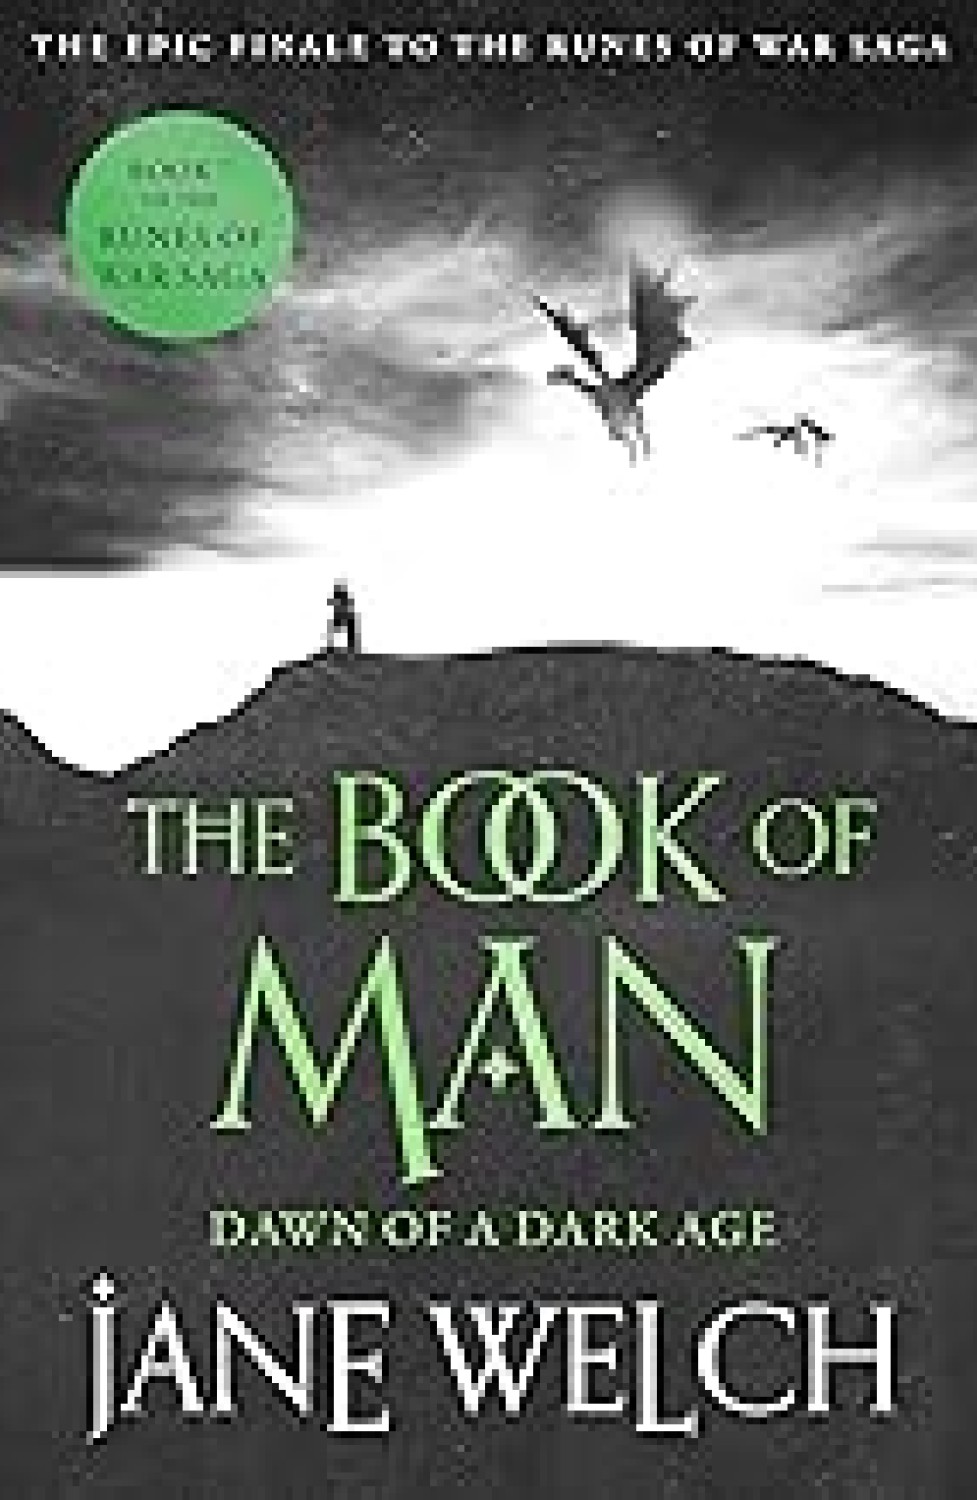 THE BOOK OF MAN : DAWN OF A DARK AGE